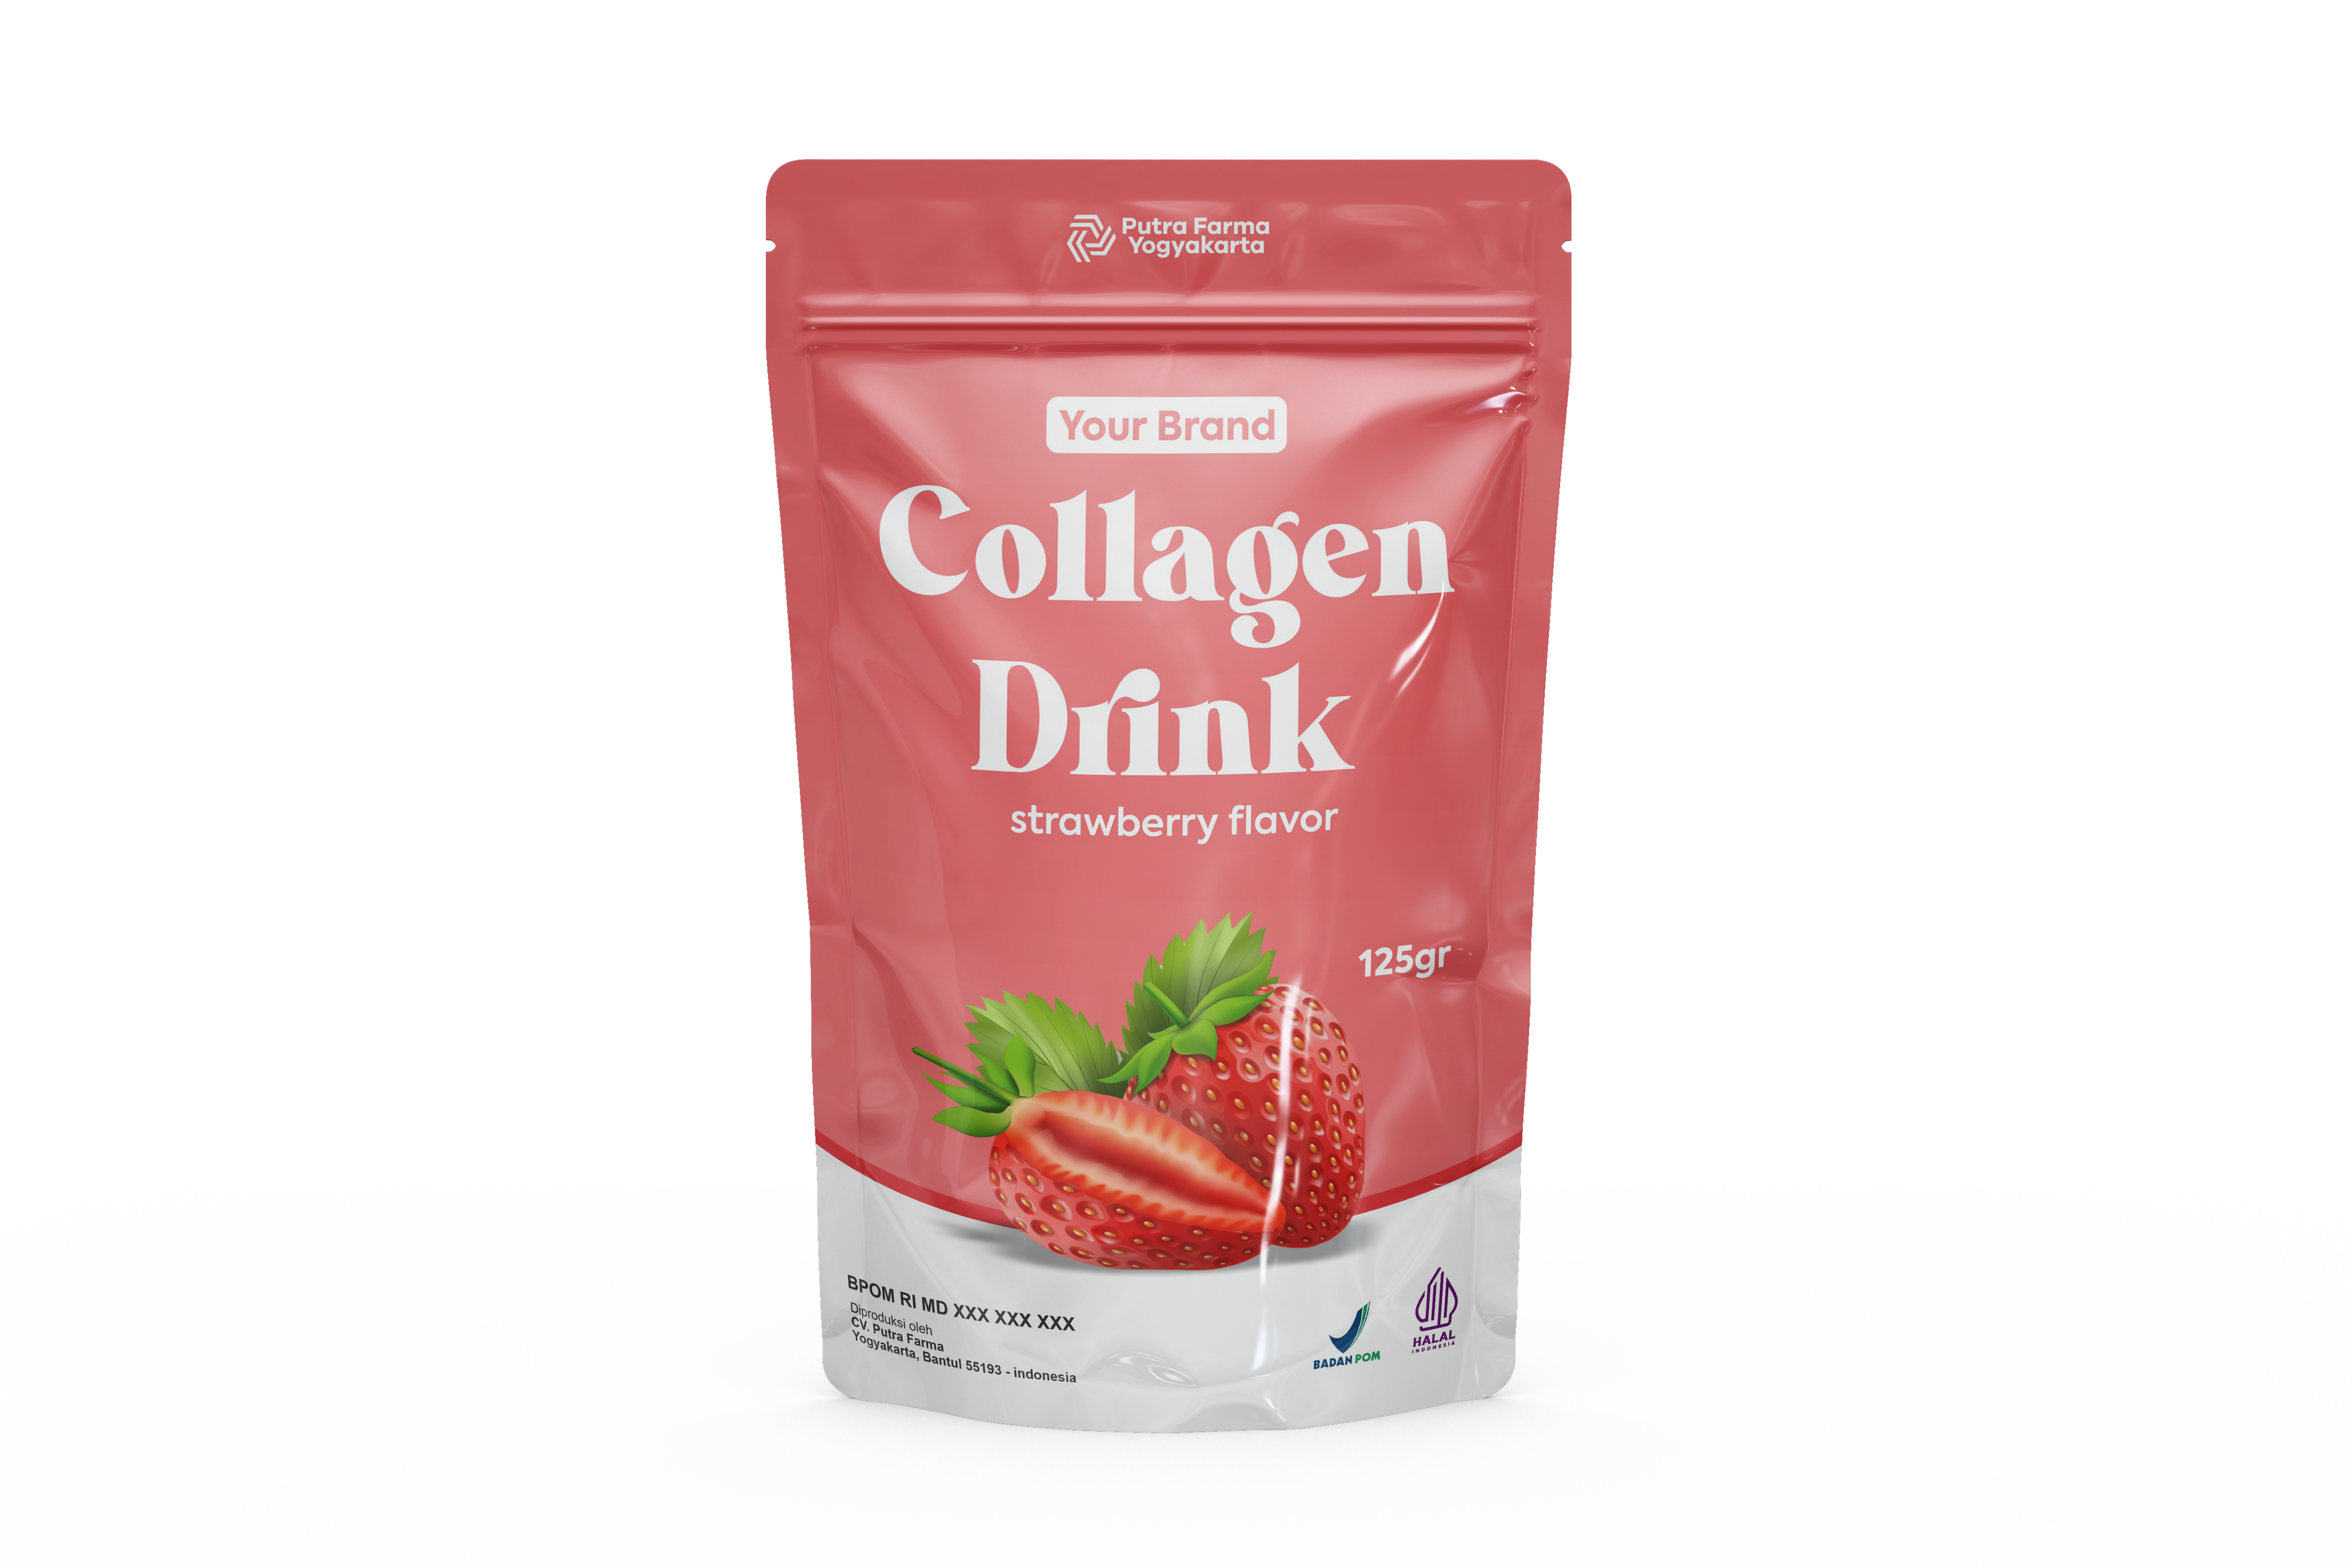 jasa maklon collagen banyak benefit